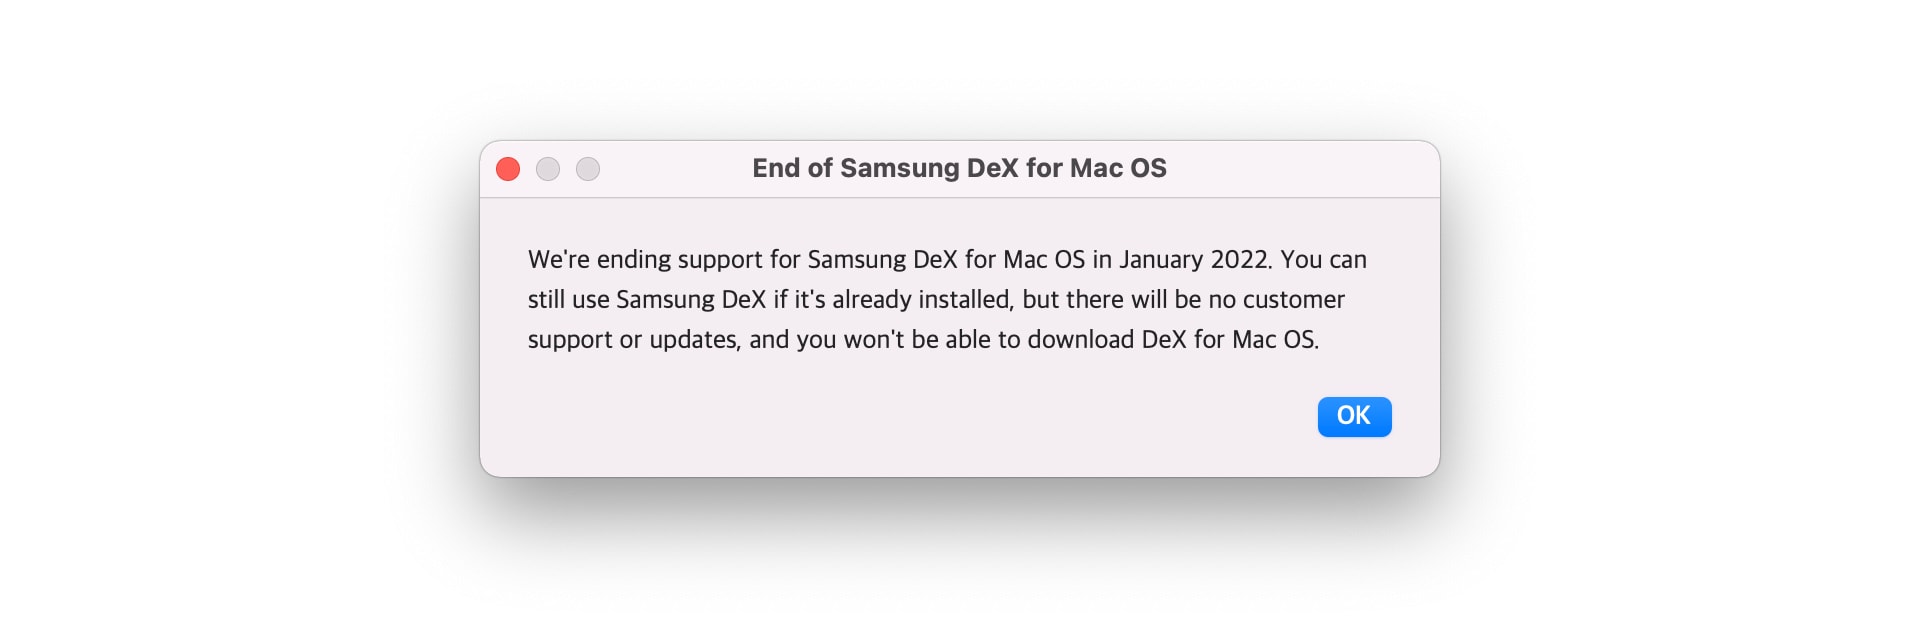 Samsung DeX on Mac